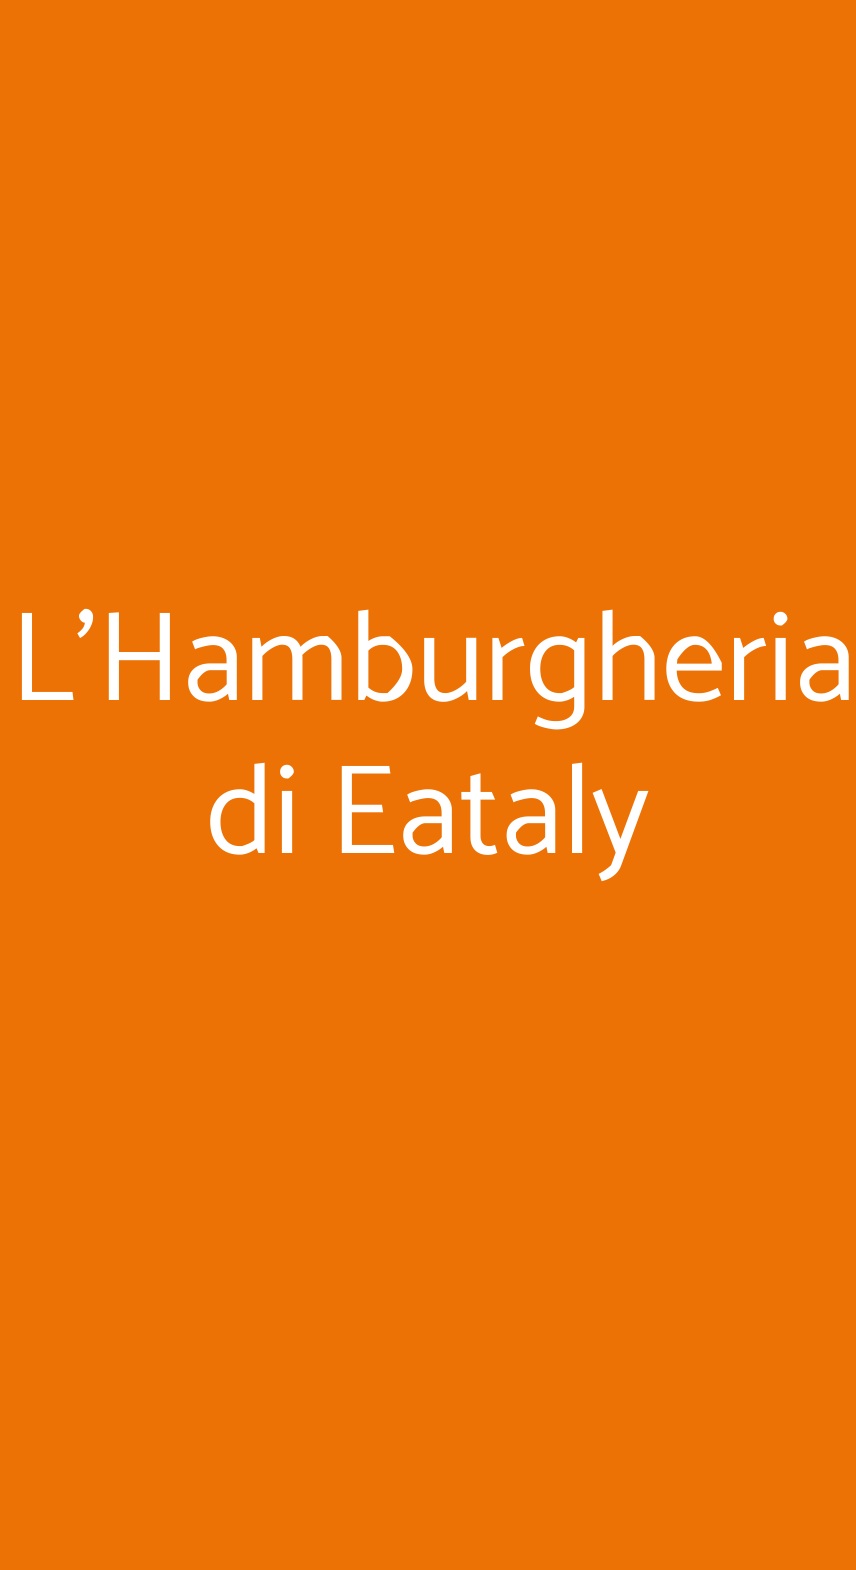 L'Hamburgheria di Eataly Torino menù 1 pagina